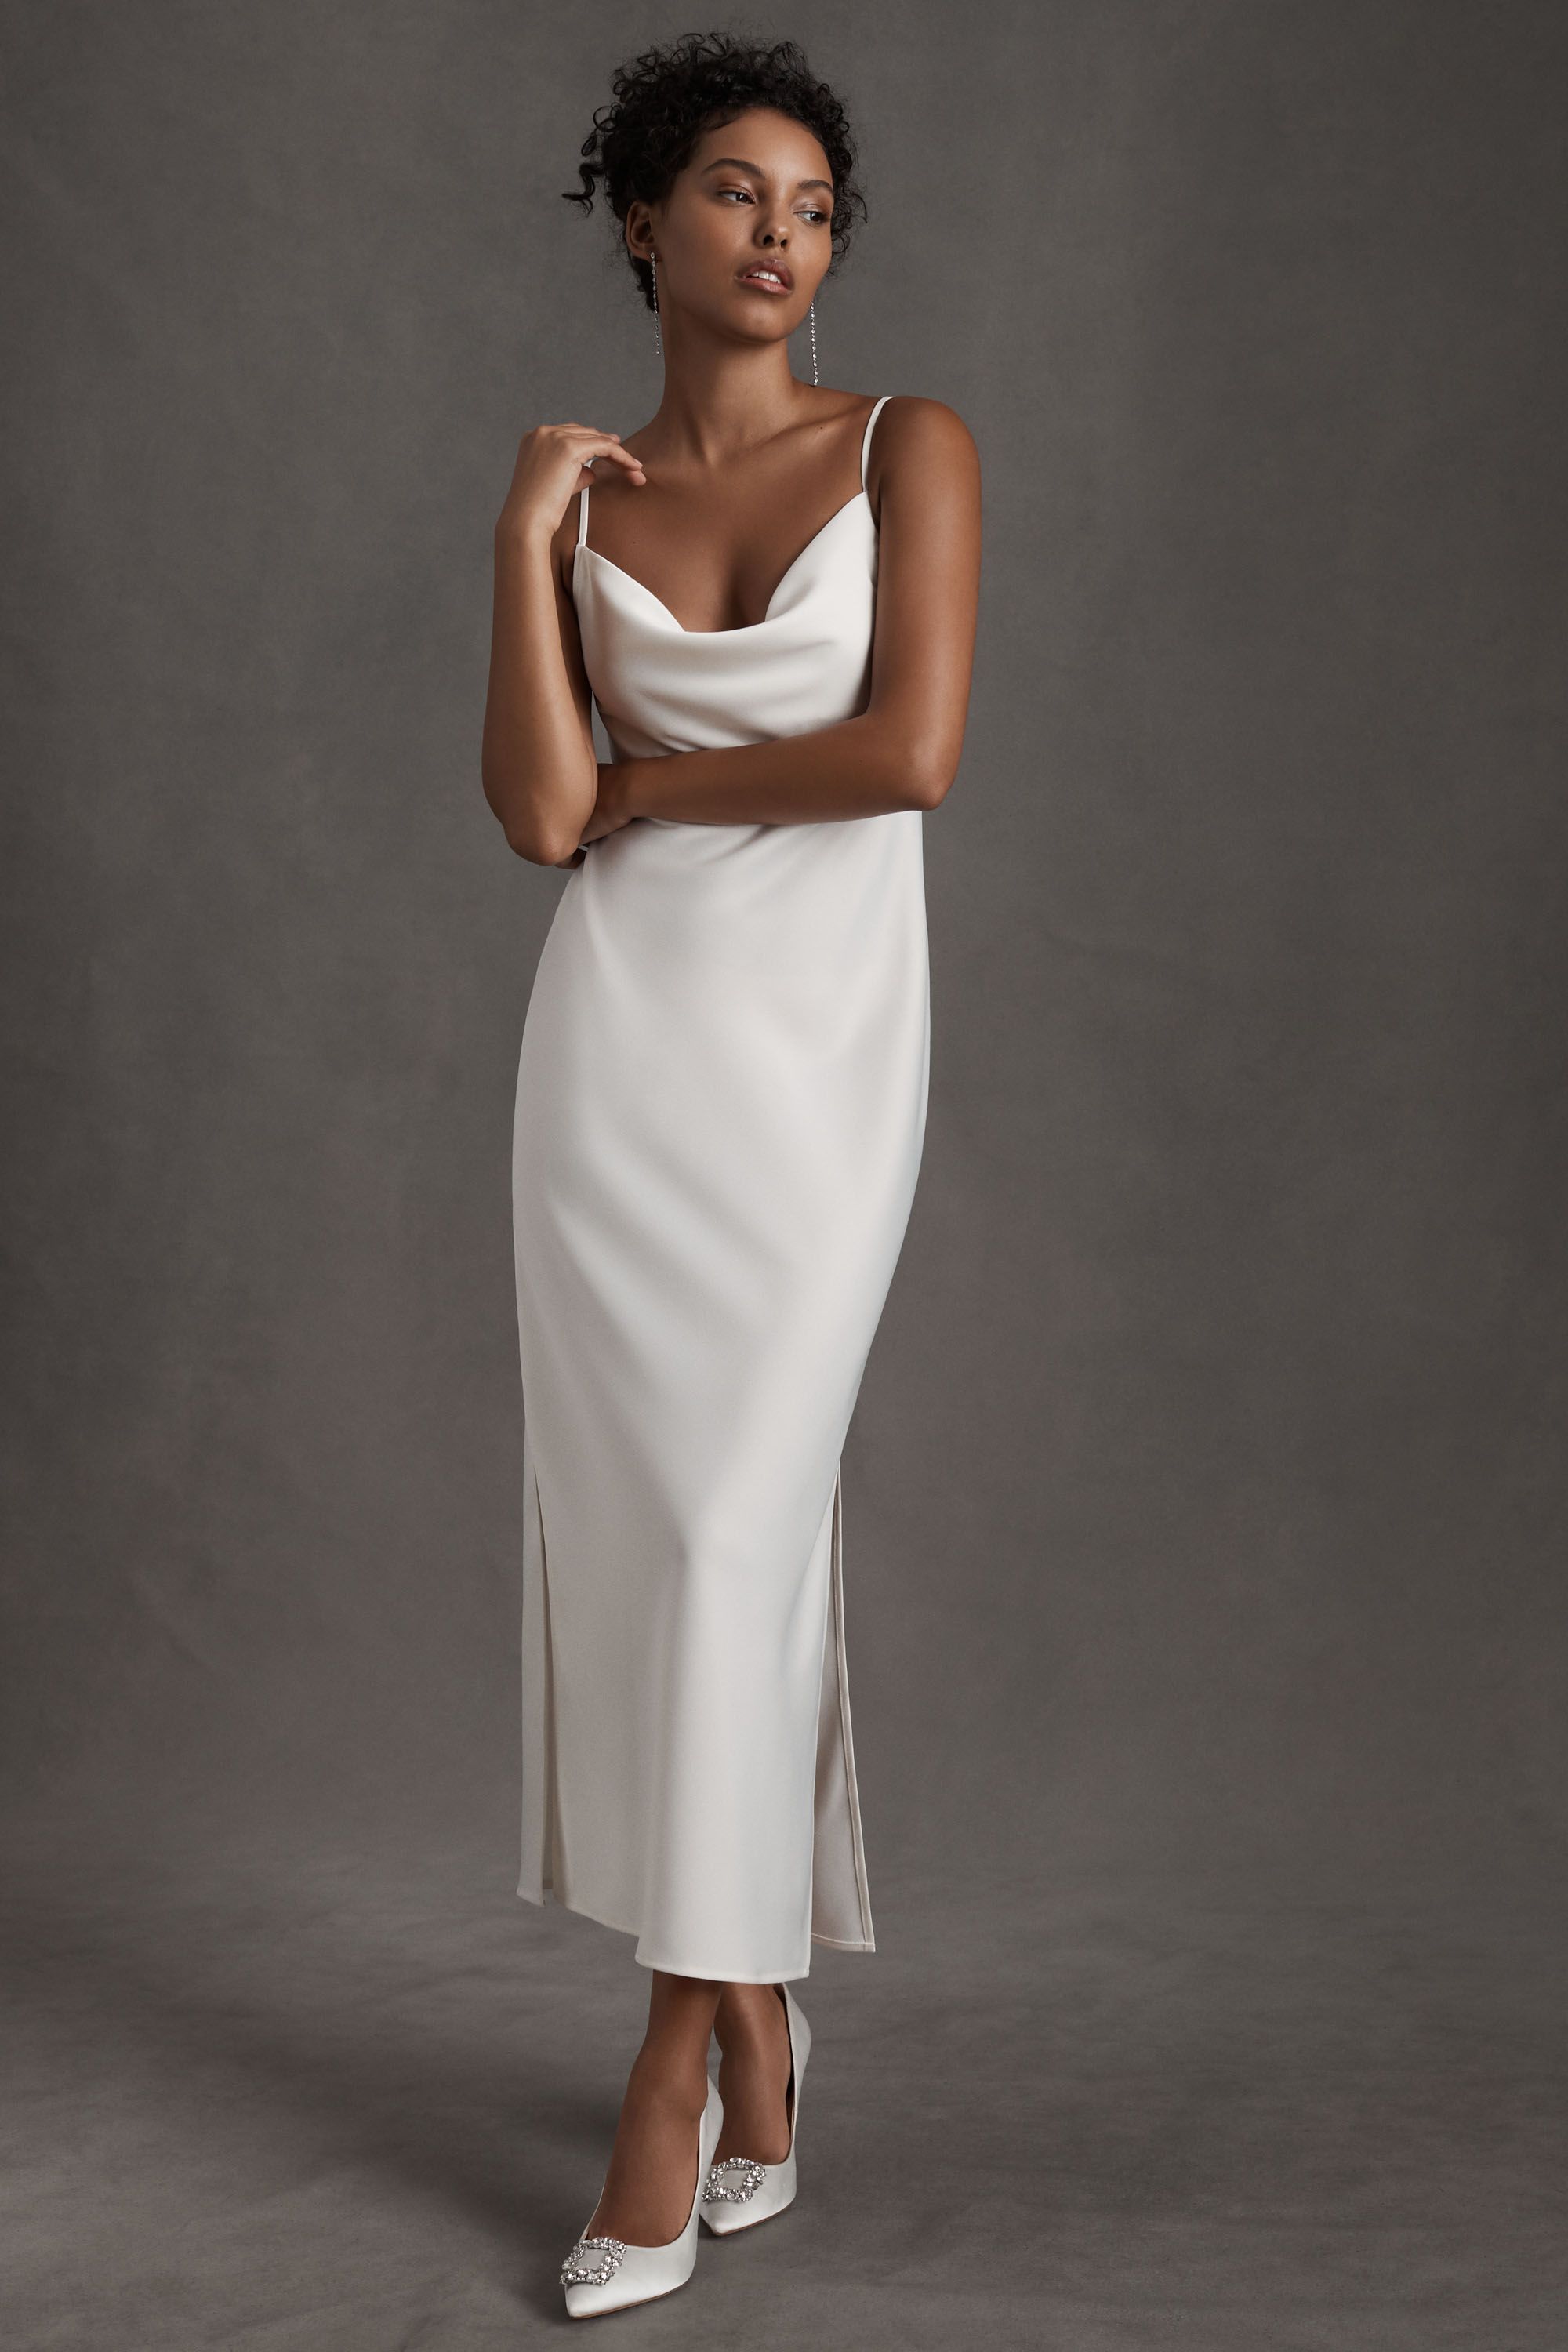 white reception dress for bride